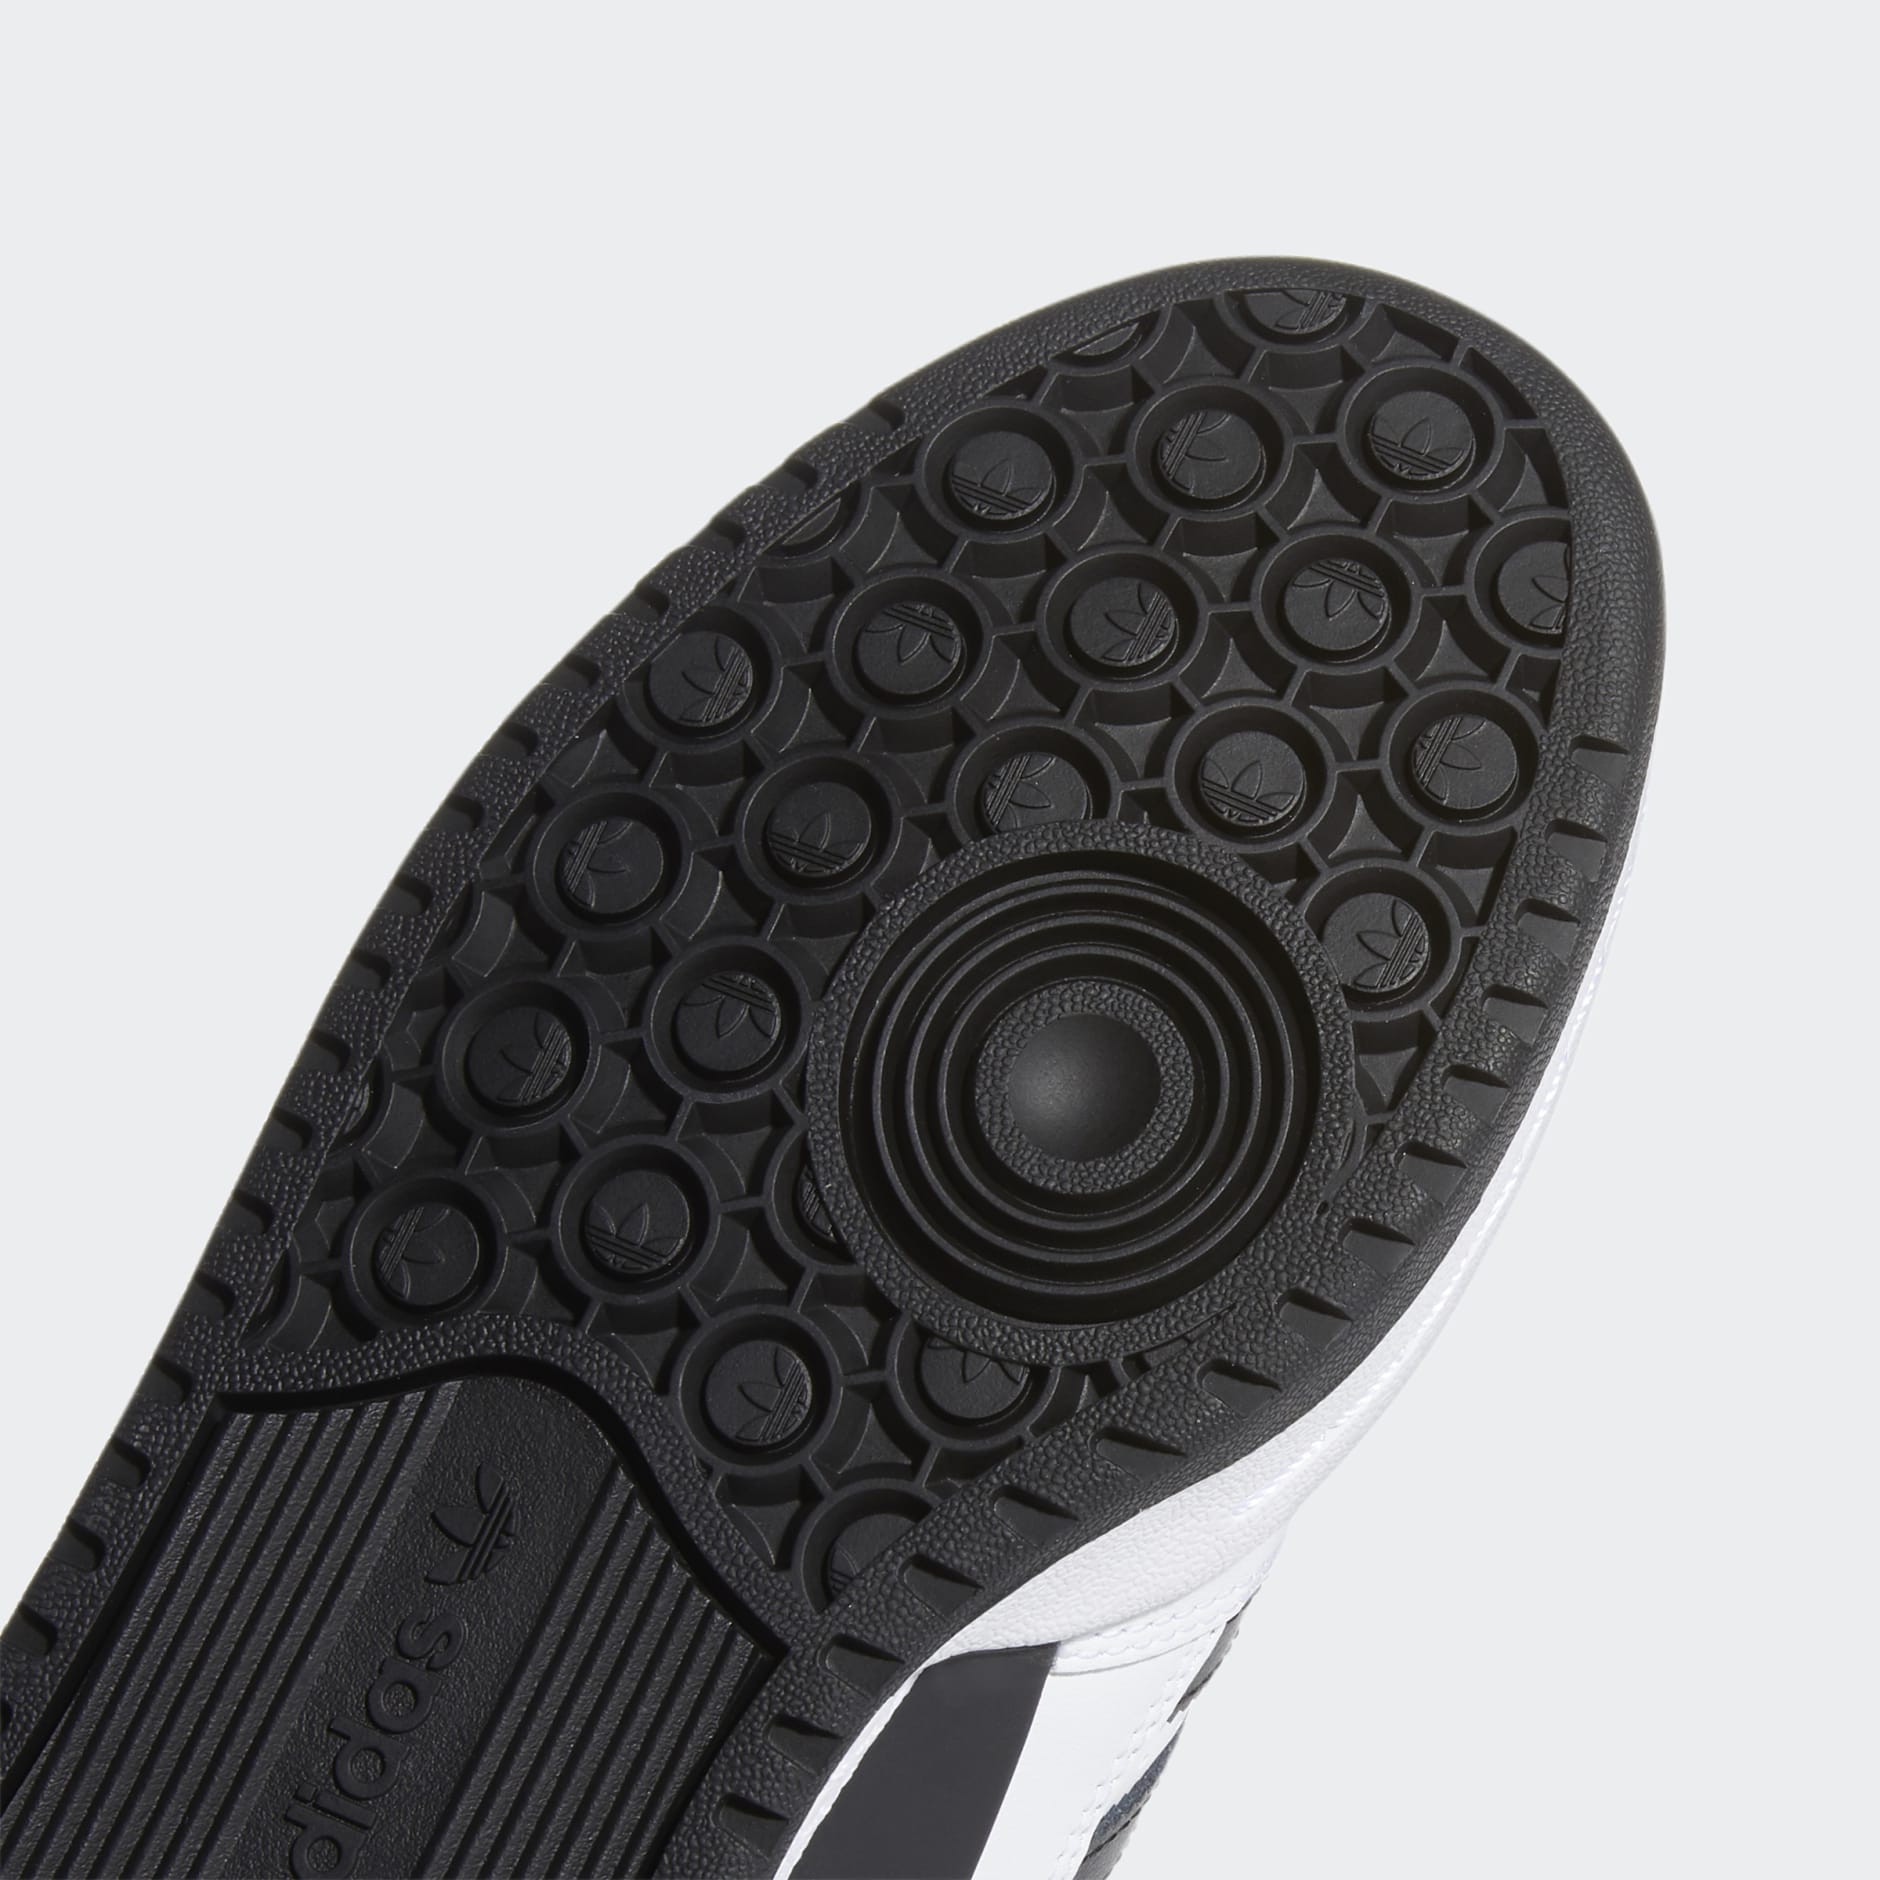 Adidas Originals - Baskets Forum Low FY7757 Footwear White Core Black 